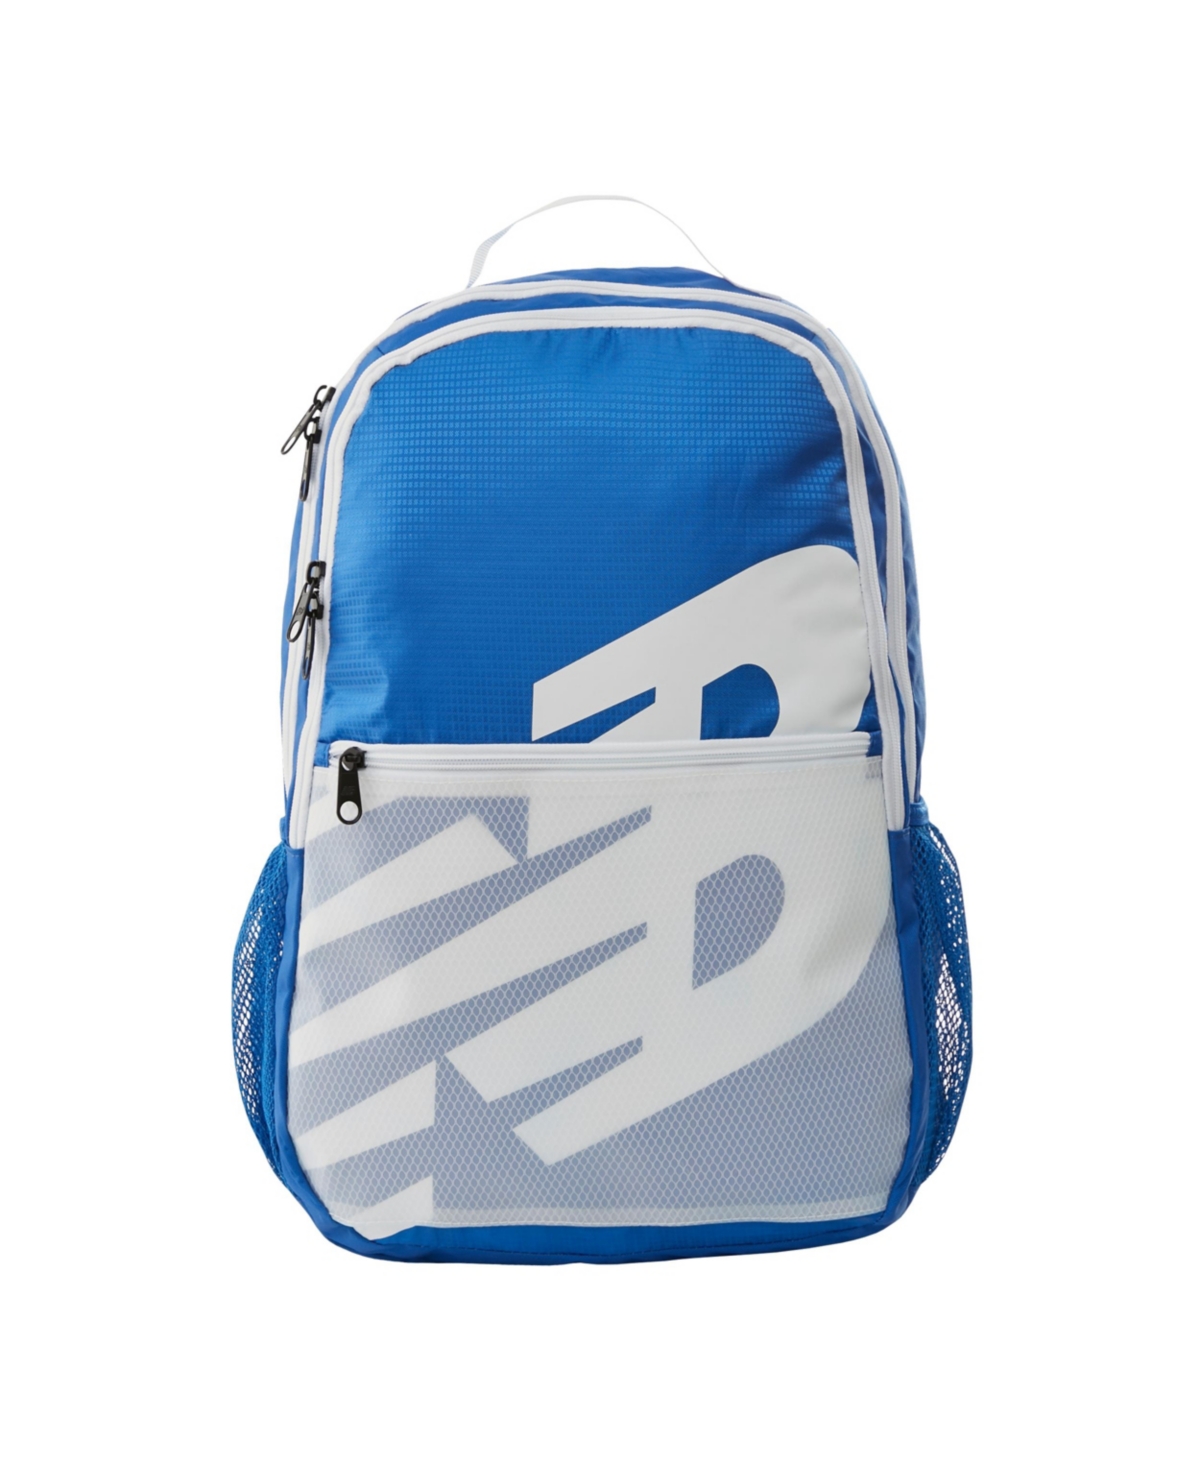 Core Performance Backpack Advance - Blue